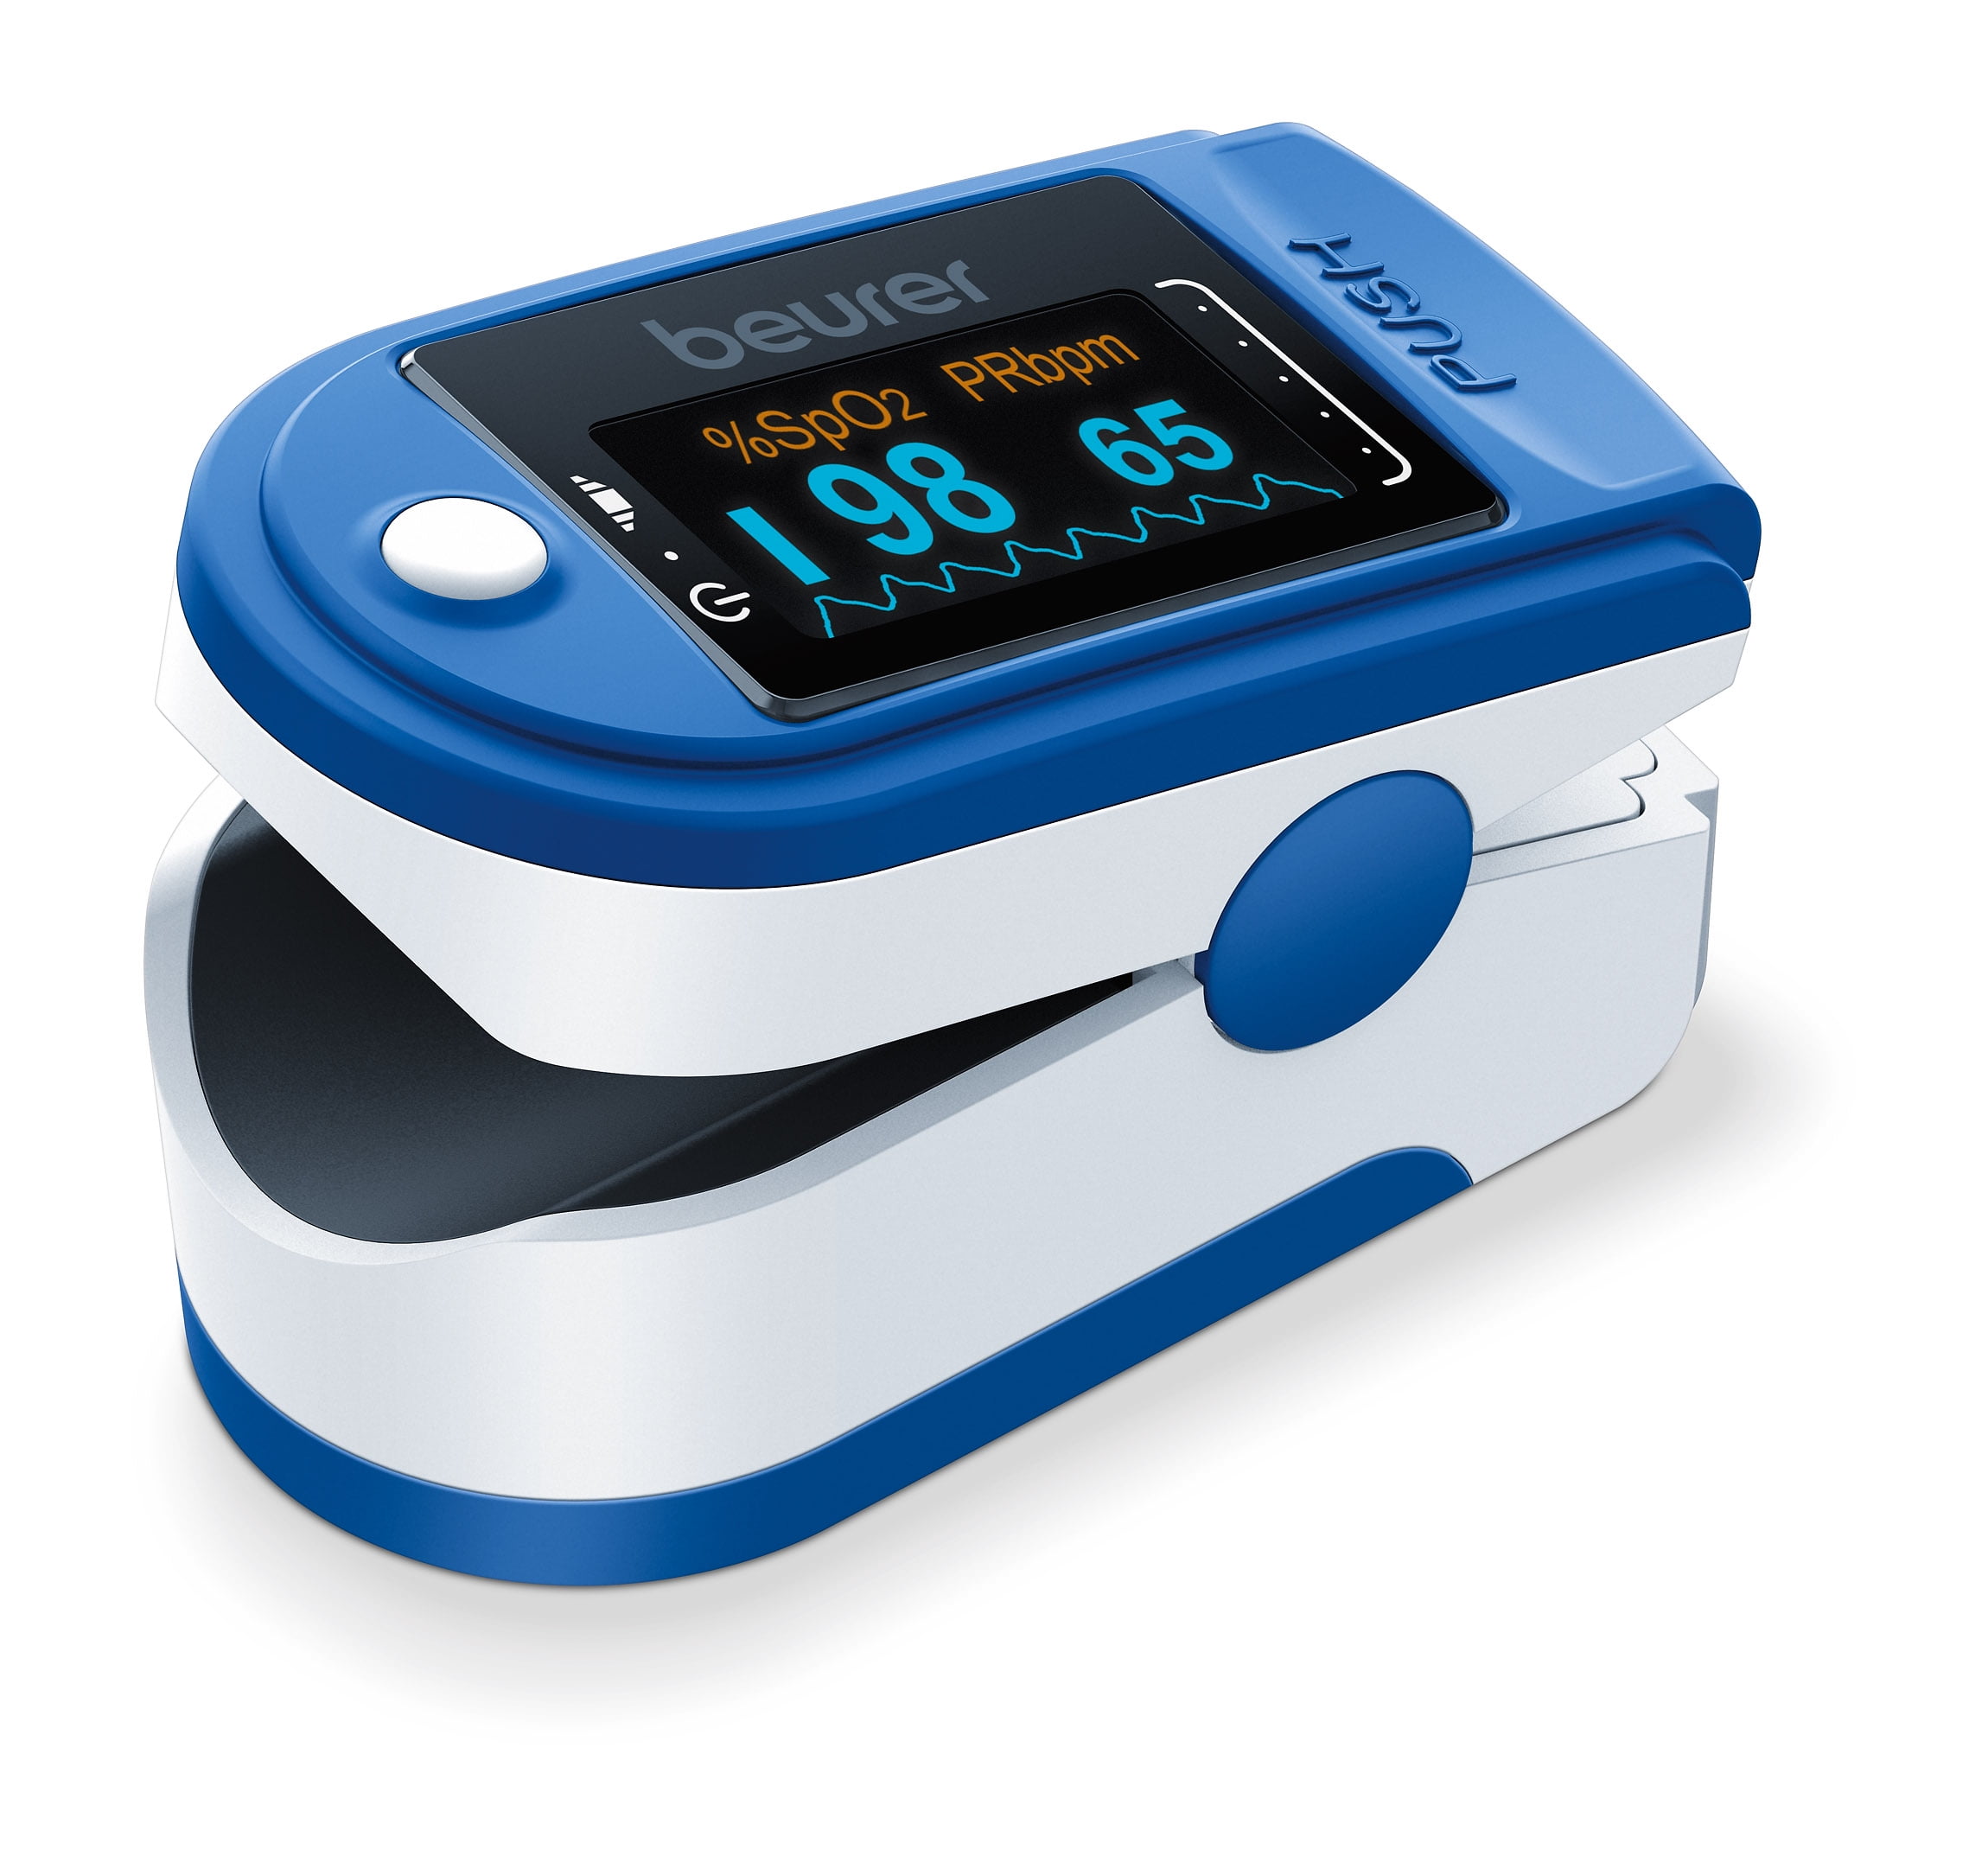 Beurer Fingertip Pulse Oximeter Tests Oxygen Saturation and Heart Rate, -